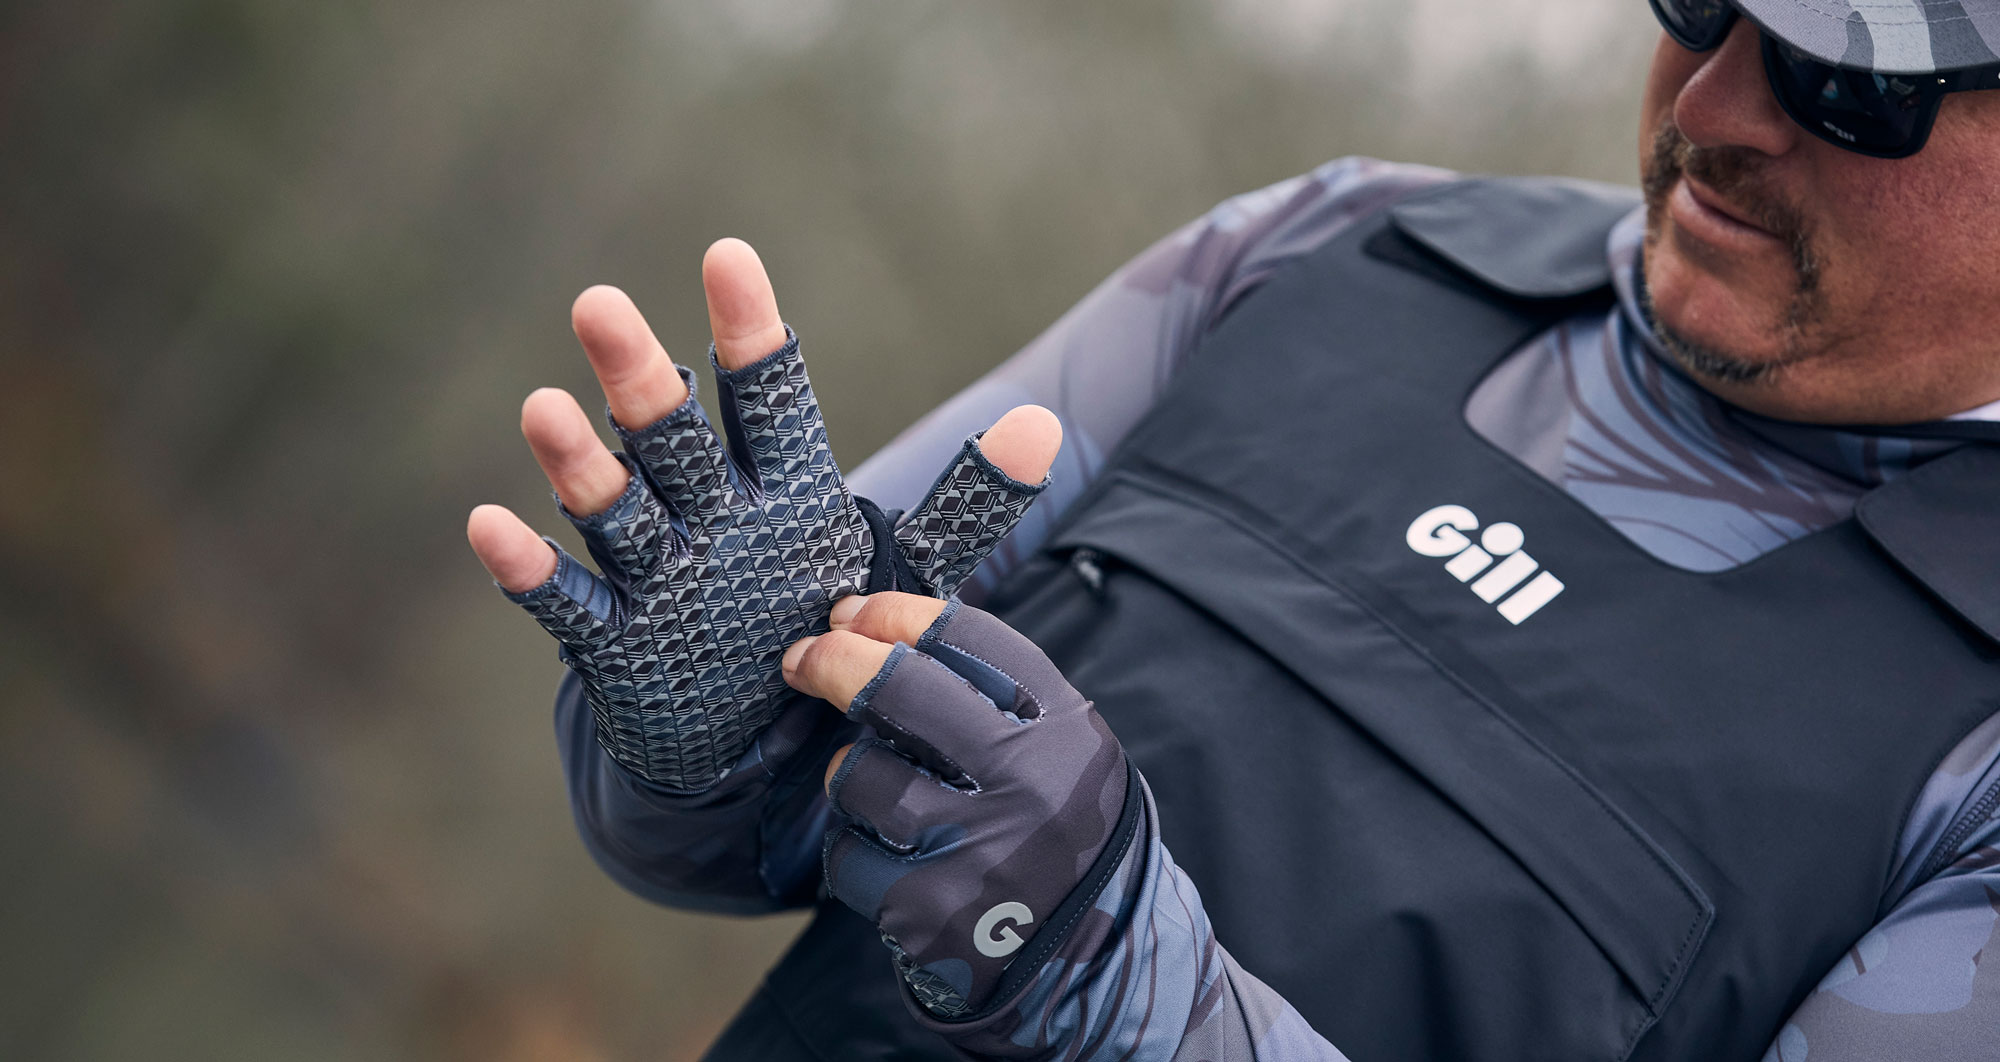 Best Gloves for Fishing - Gill Fishing